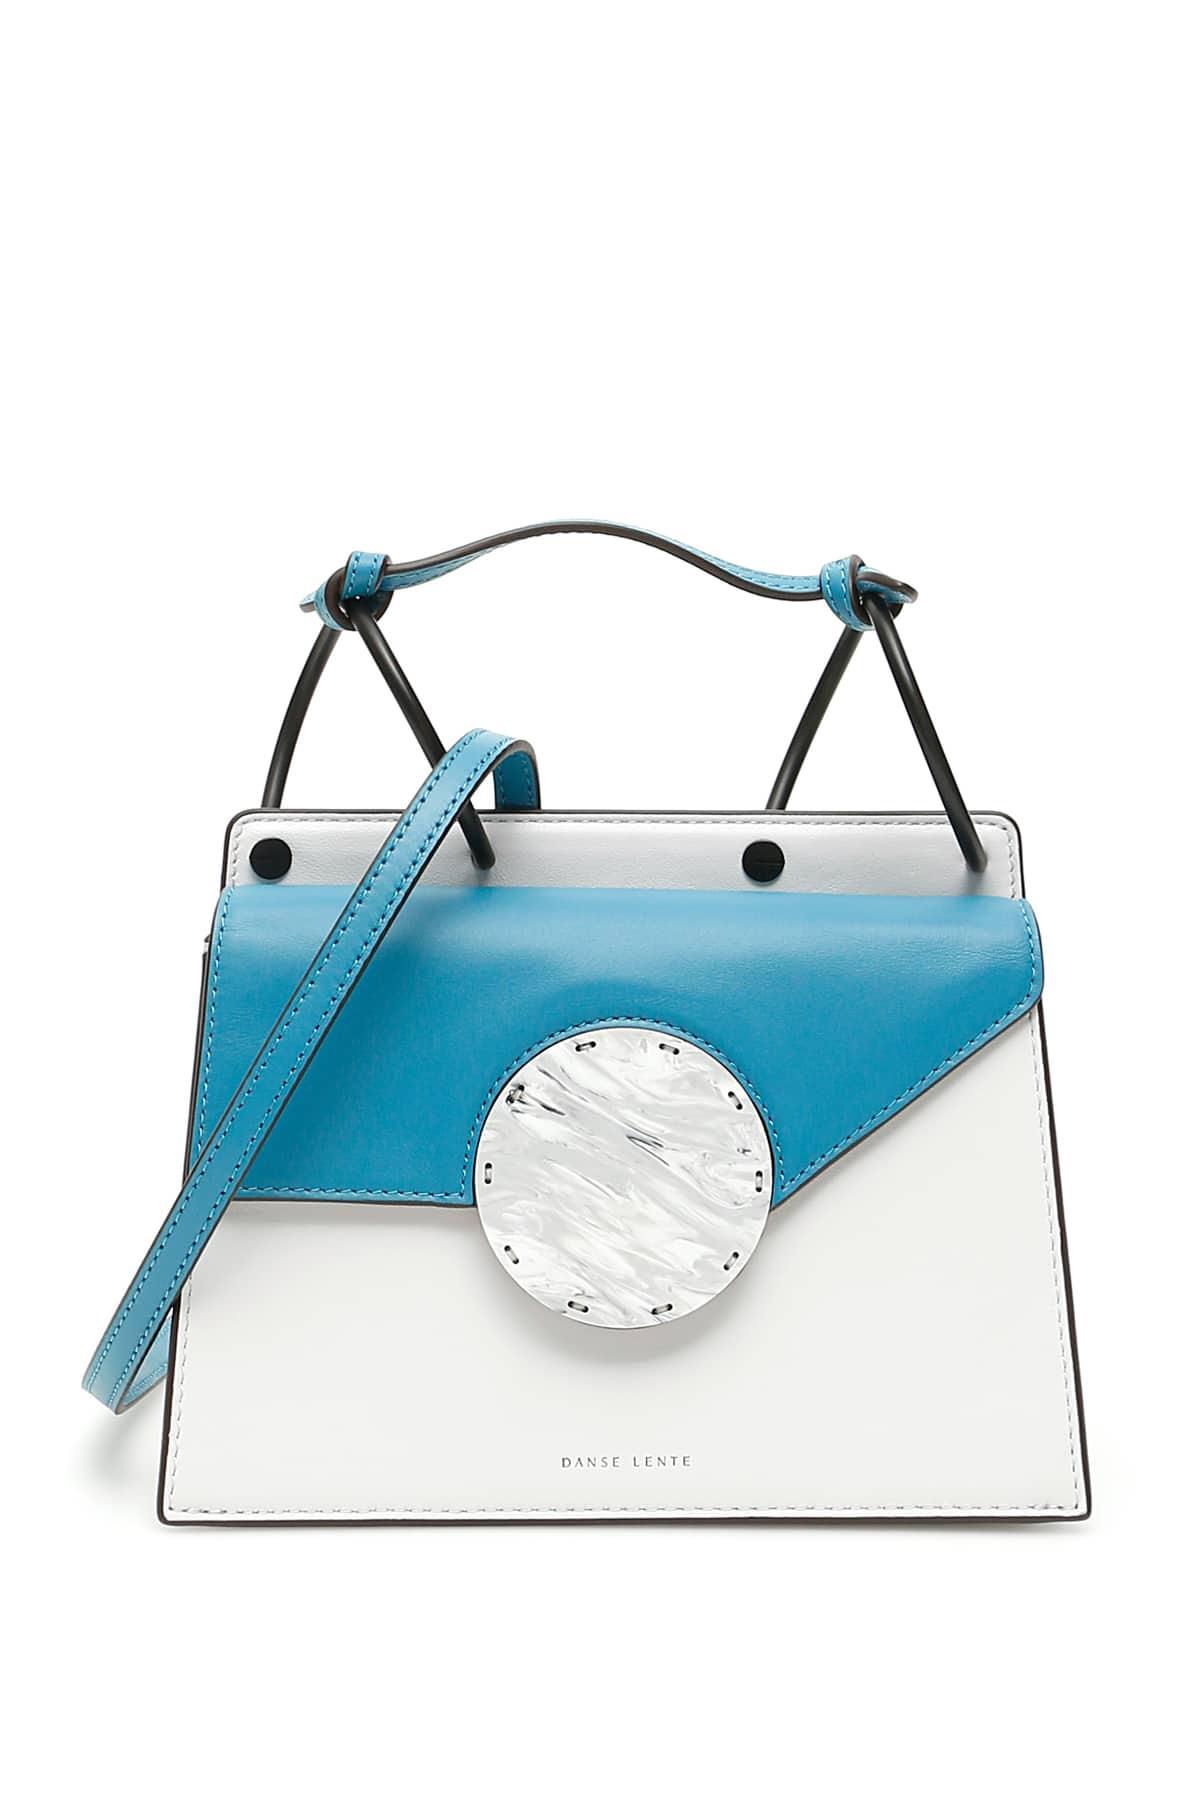 Danse Lente Leather Phoebe Bis Bag in White,Blue,Light Blue (Blue ...